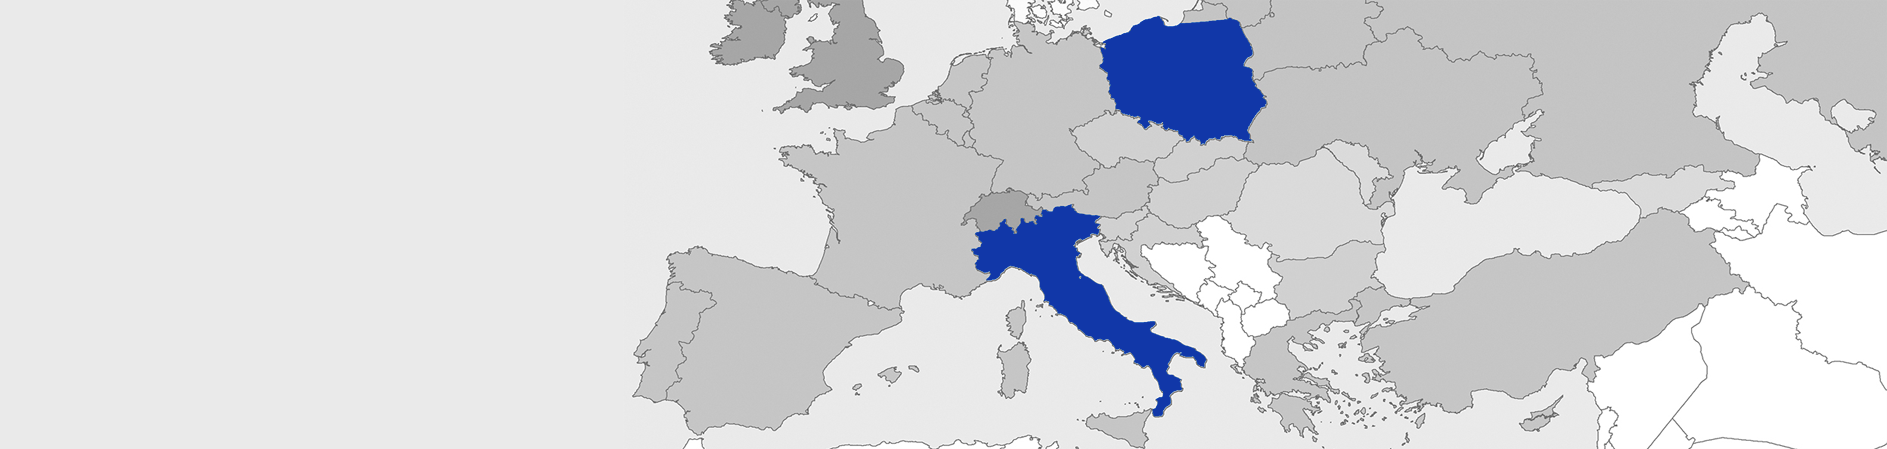 Mappa europa